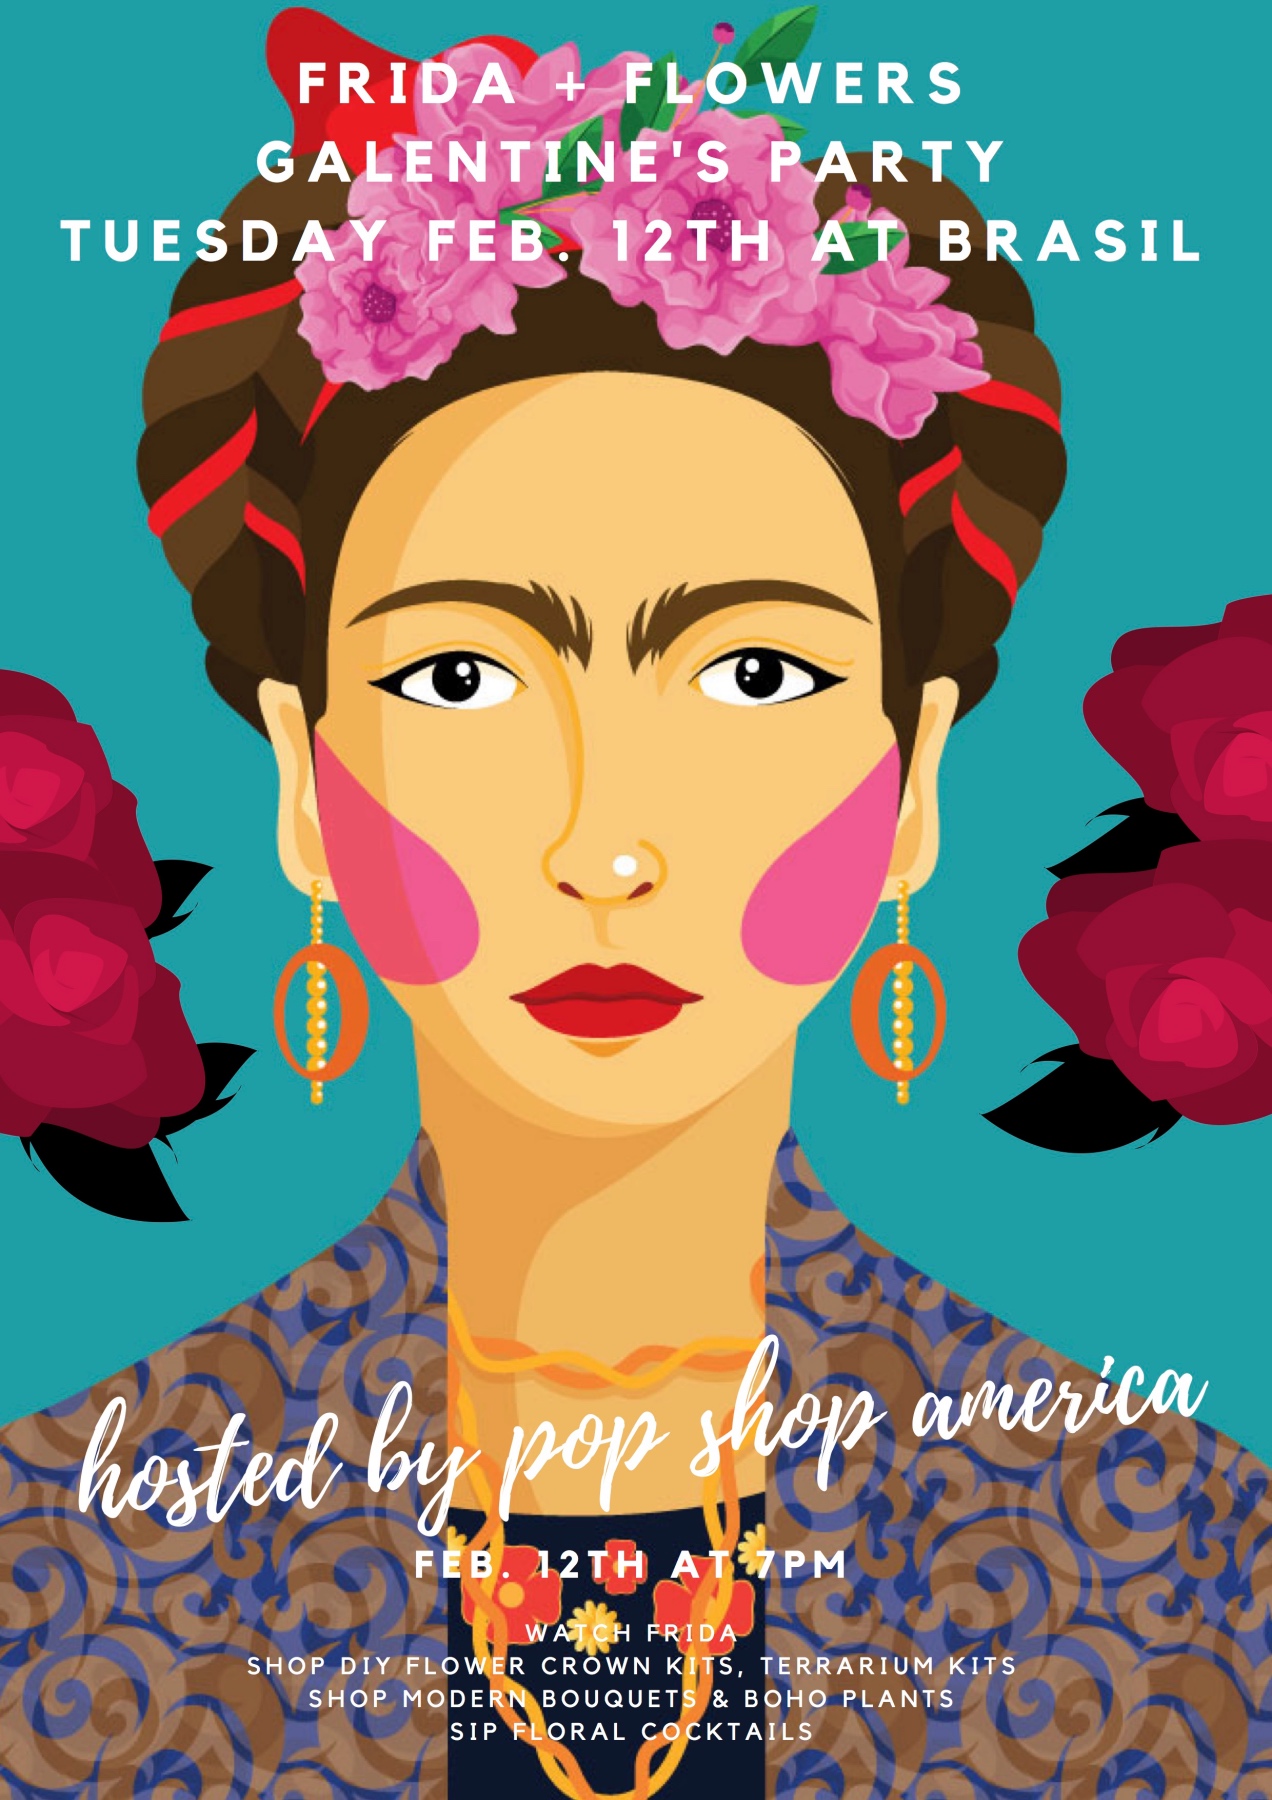 Frida + Flowers Galentine's Party by Pop Shop America Terrariums Houston